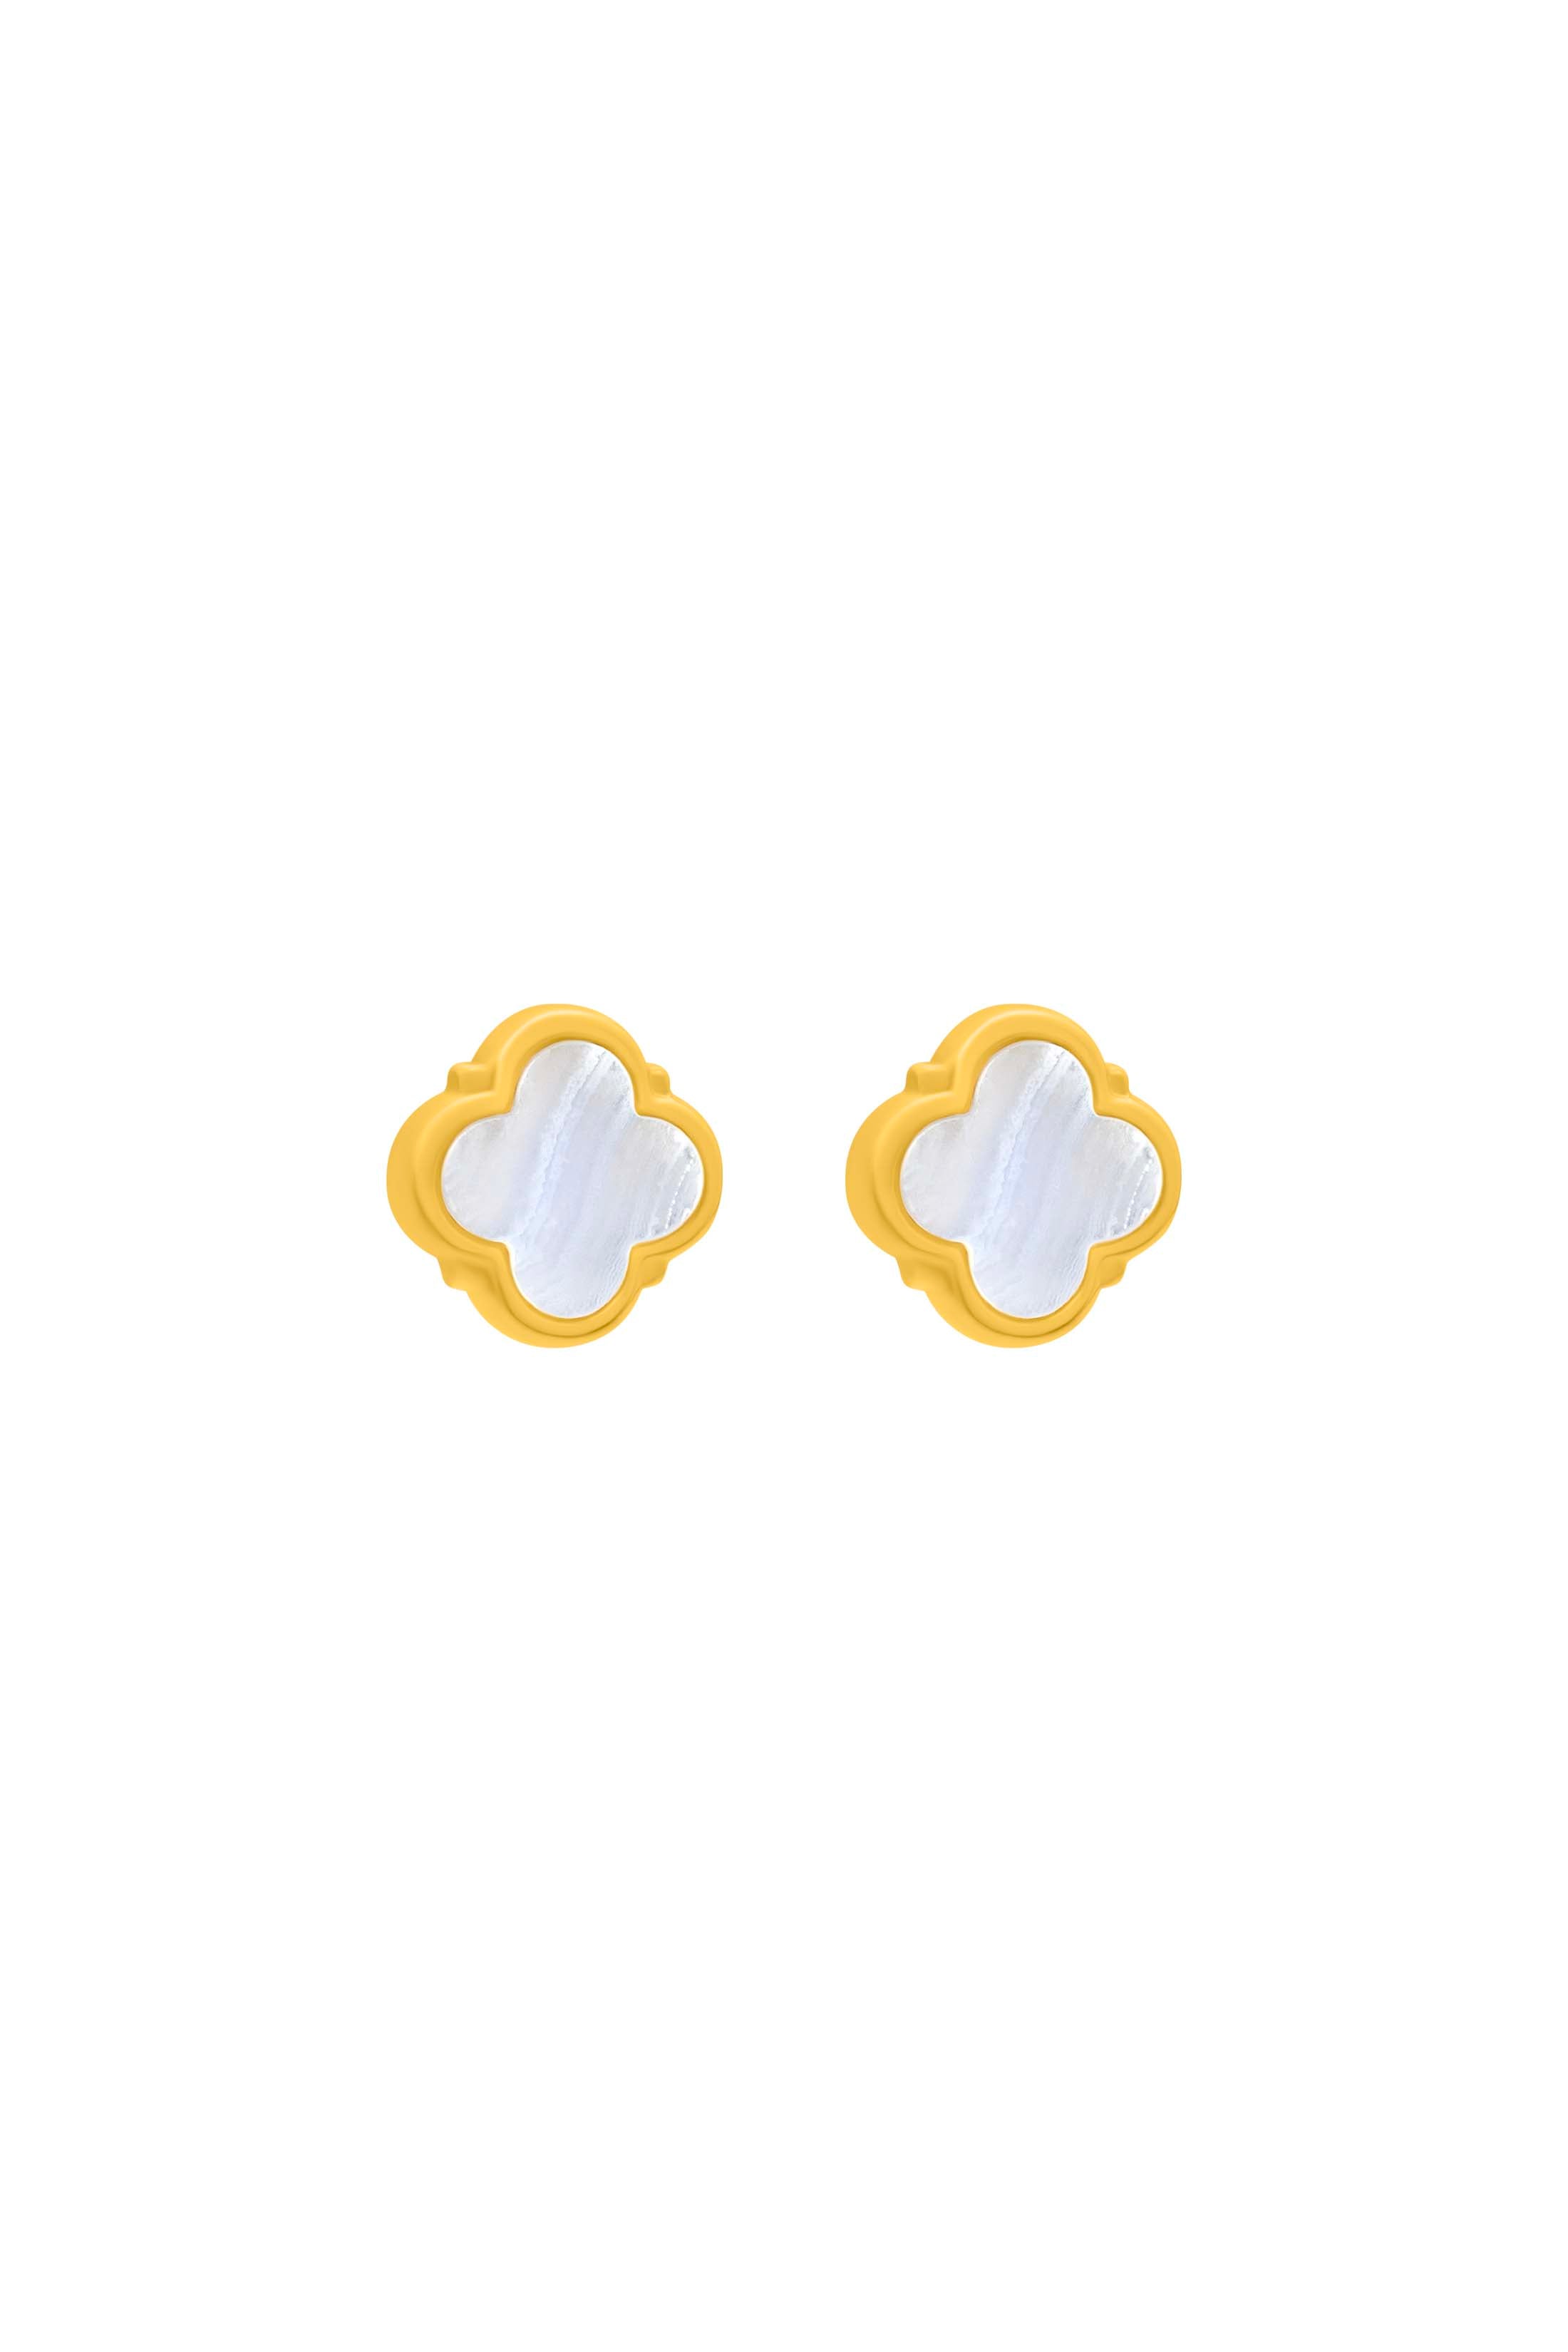 Lace Agate Stone Stud Earring Set